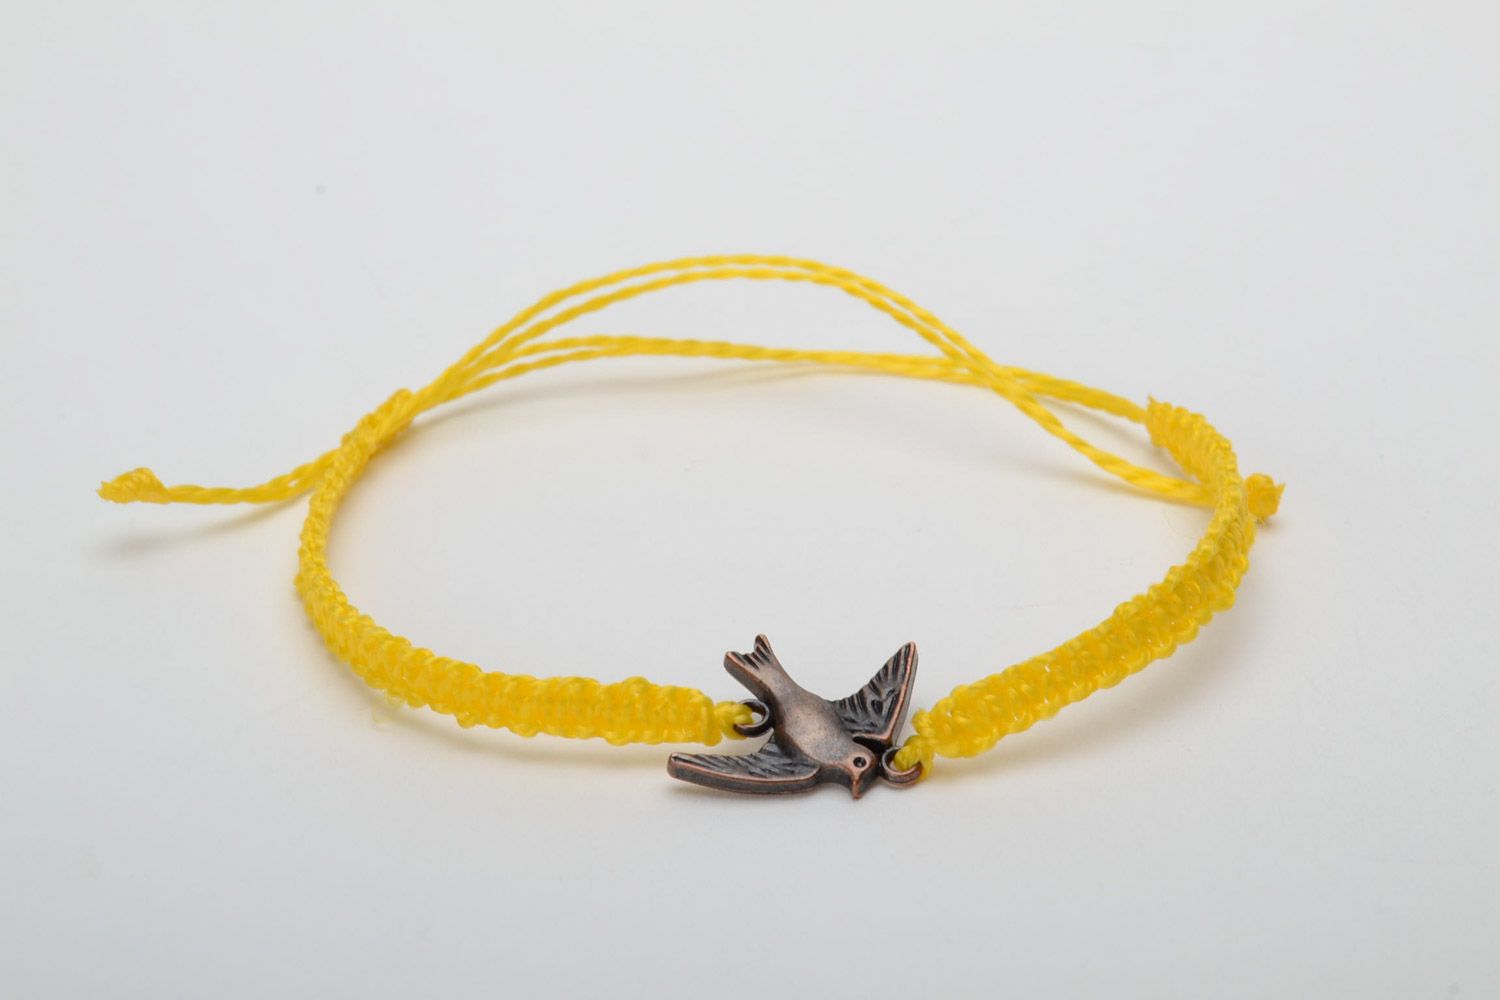 Handmade women's woven capron thread wrist bracelet of yellow color with metal bird charm photo 5